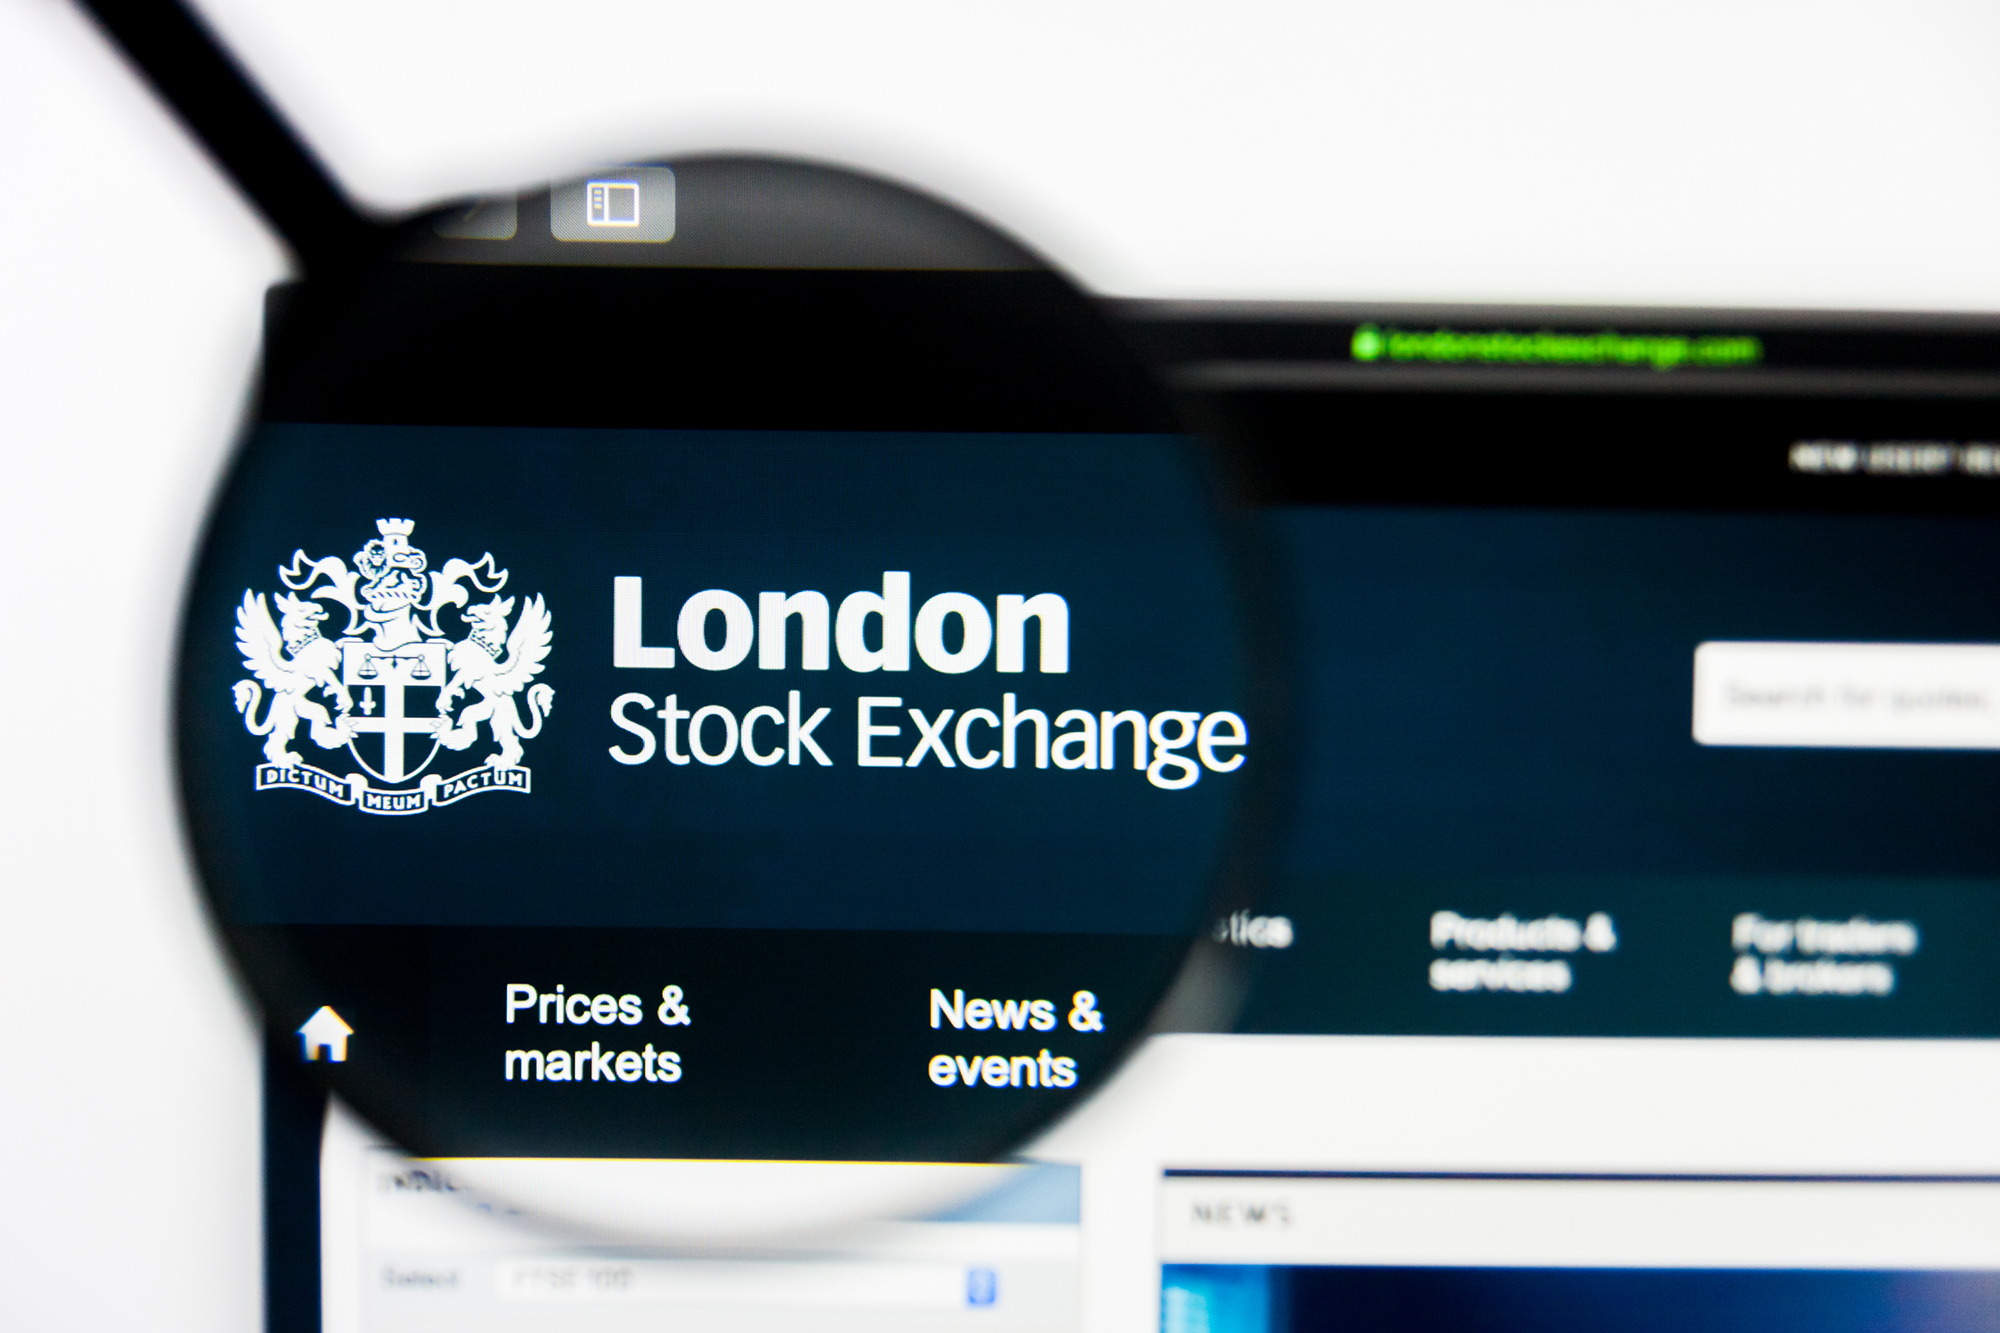 London Stock Exchange website. (Image: Shutterstock/Pavel Kapysh)